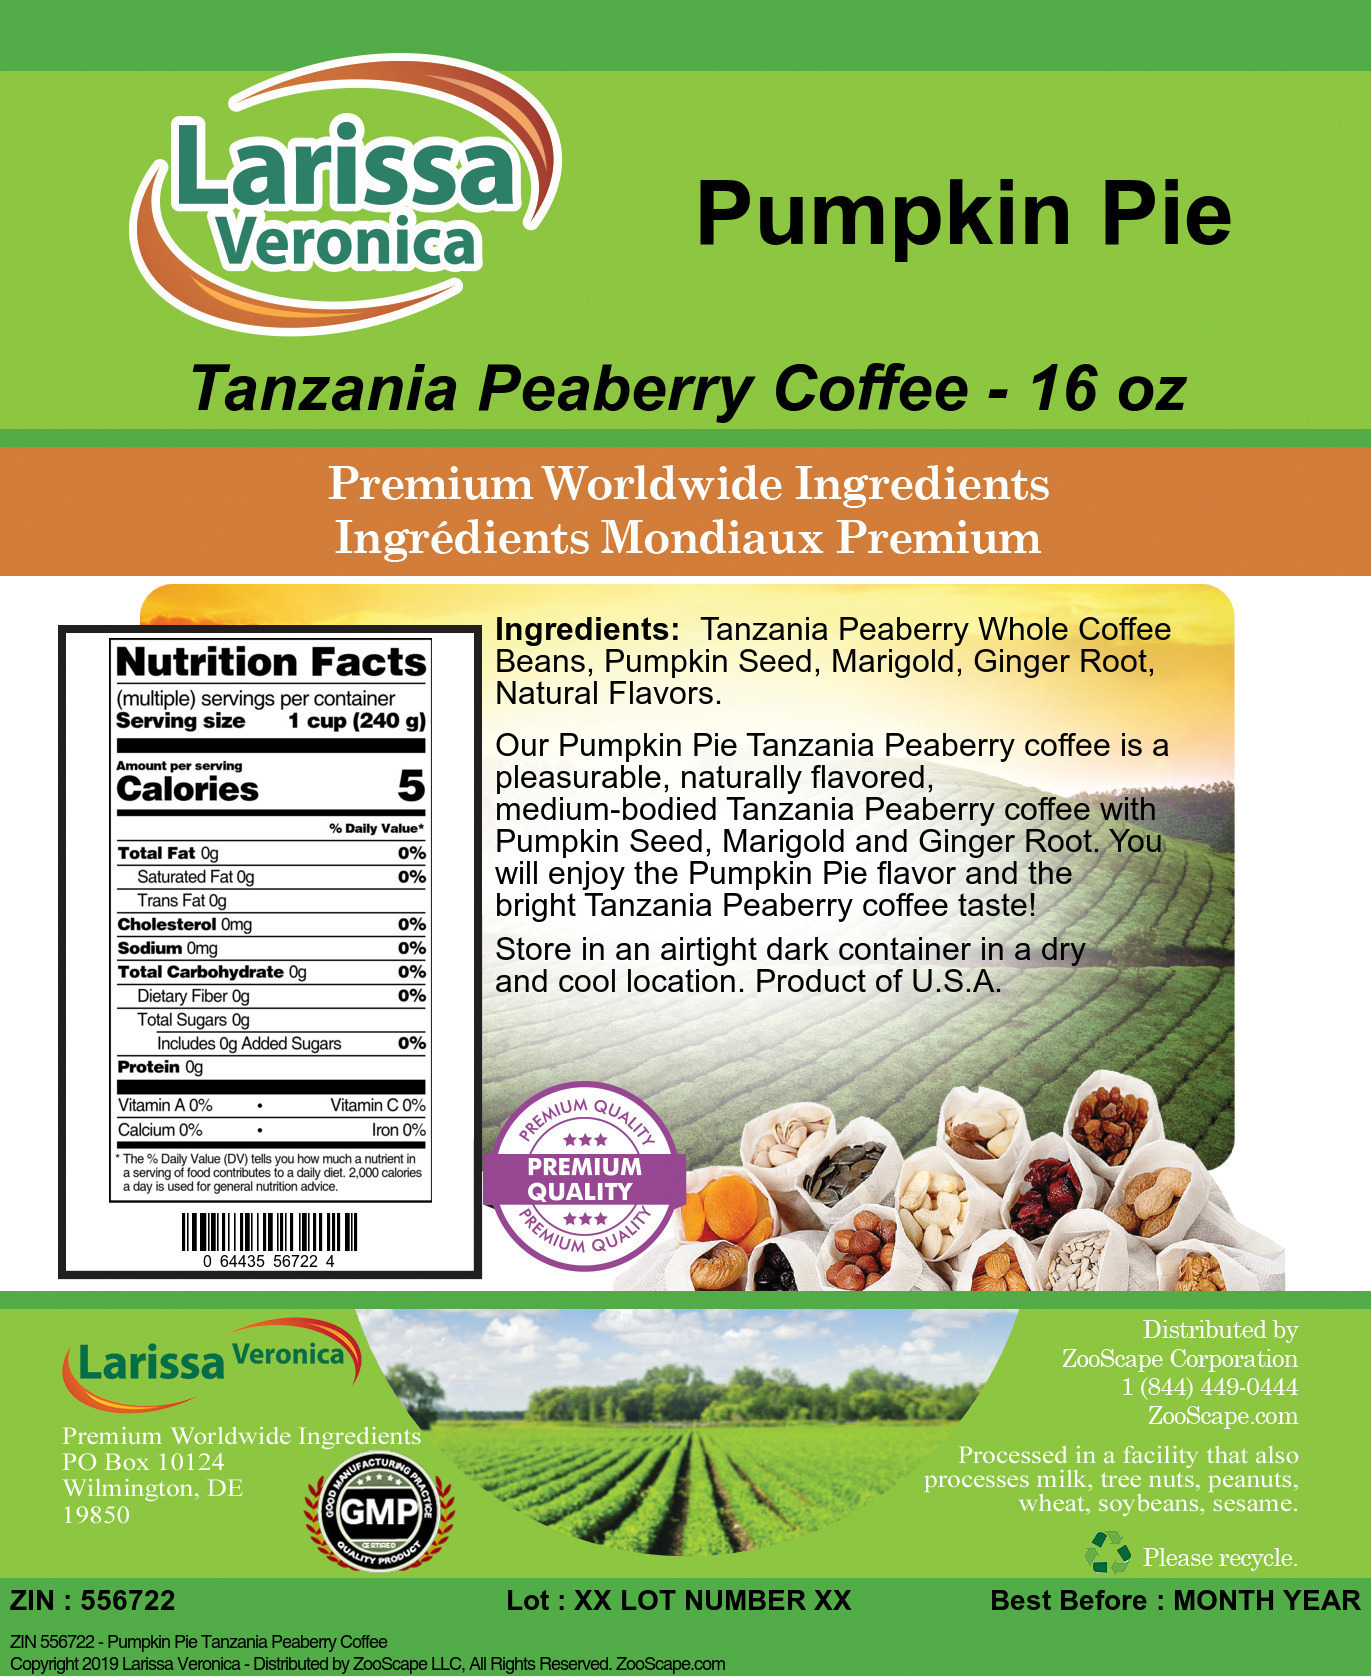 Pumpkin Pie Tanzania Peaberry Coffee - Label